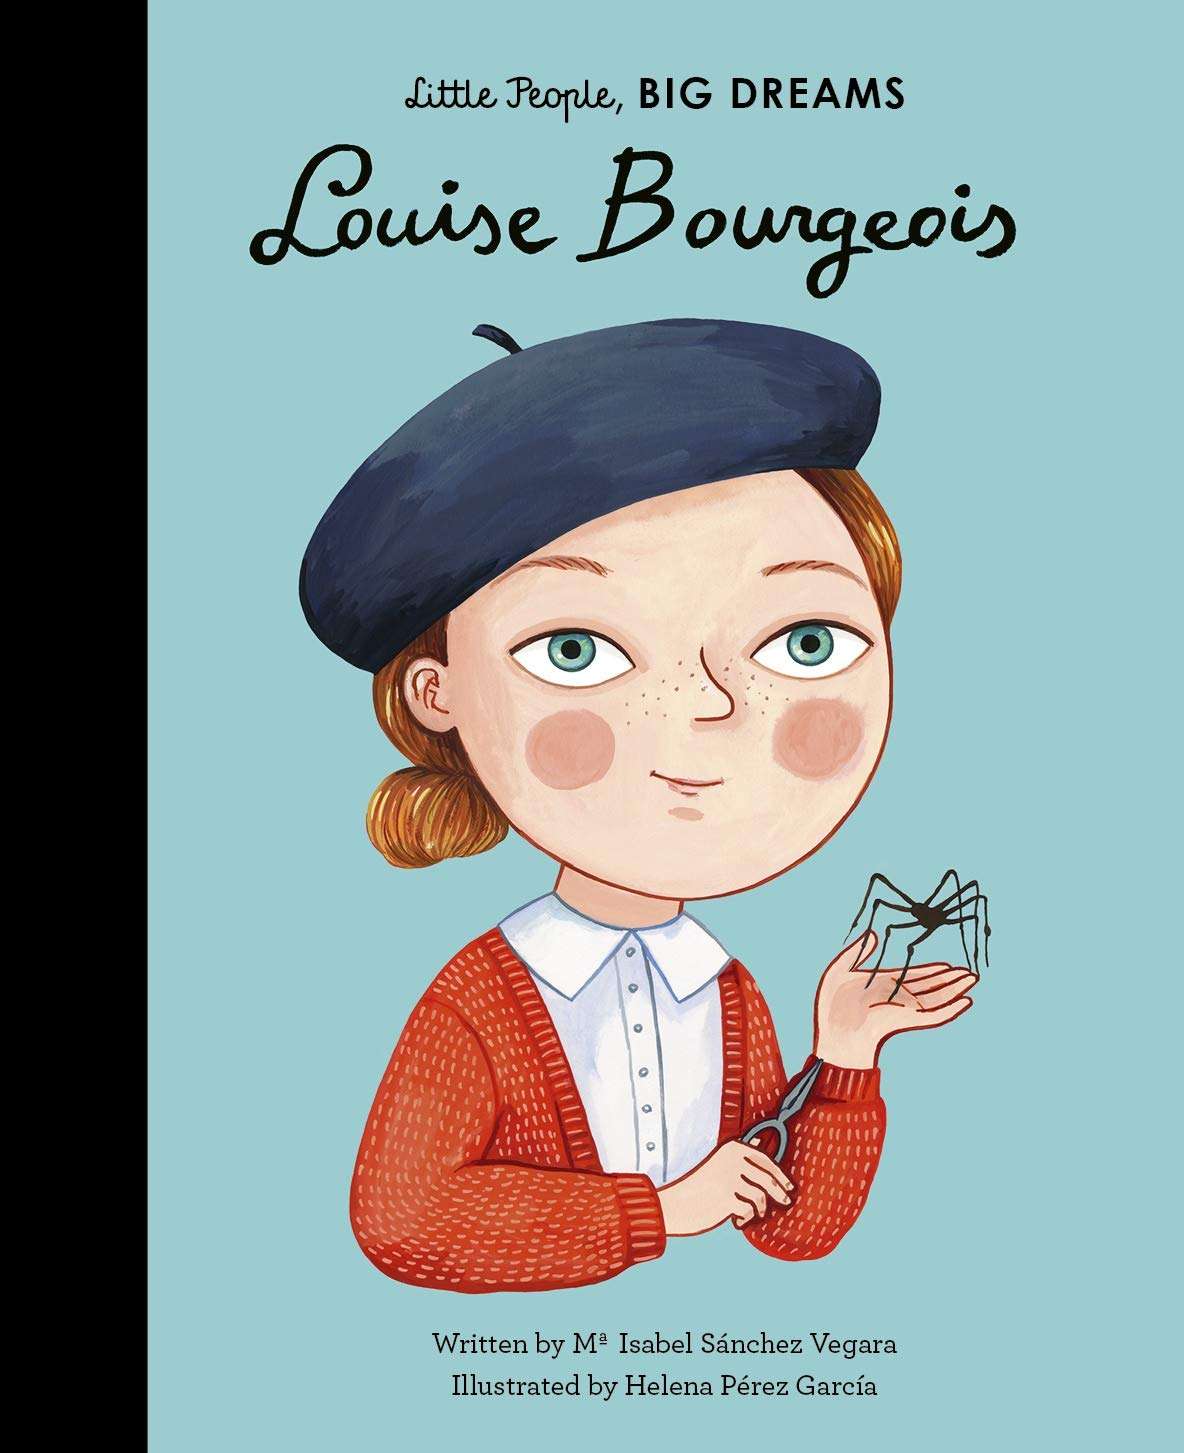 Little People Big Dreams: Louise Bourgeois